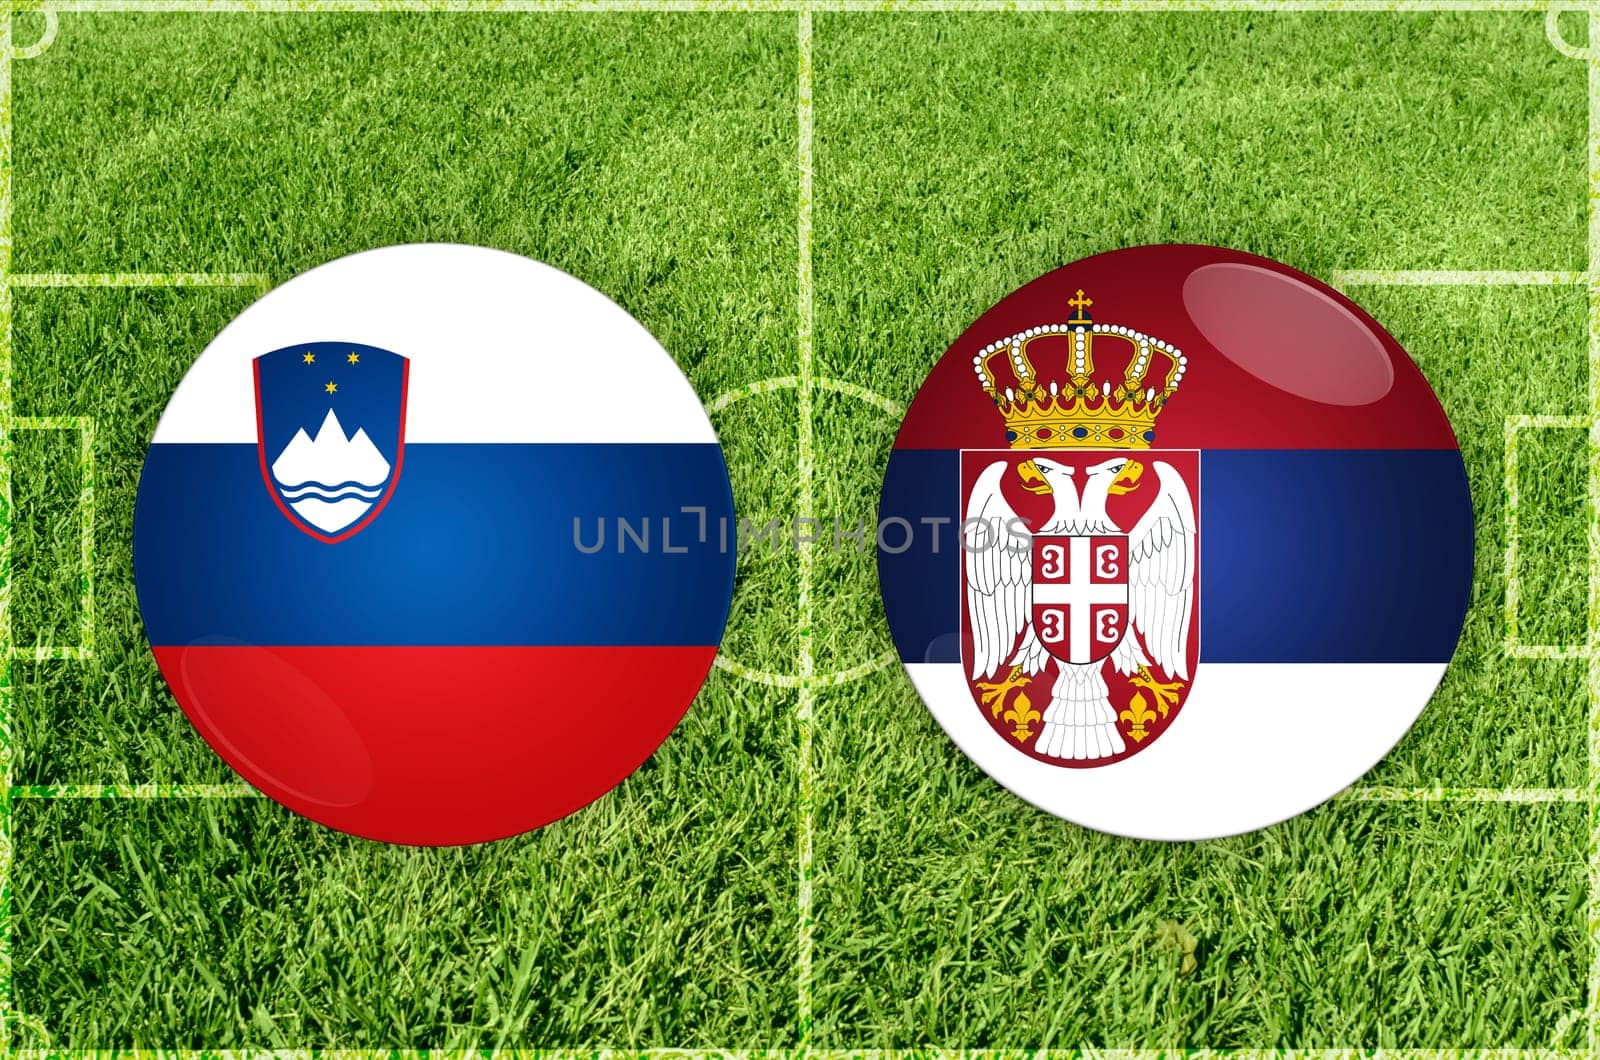 Slovenia vs Serbia football match by rusak